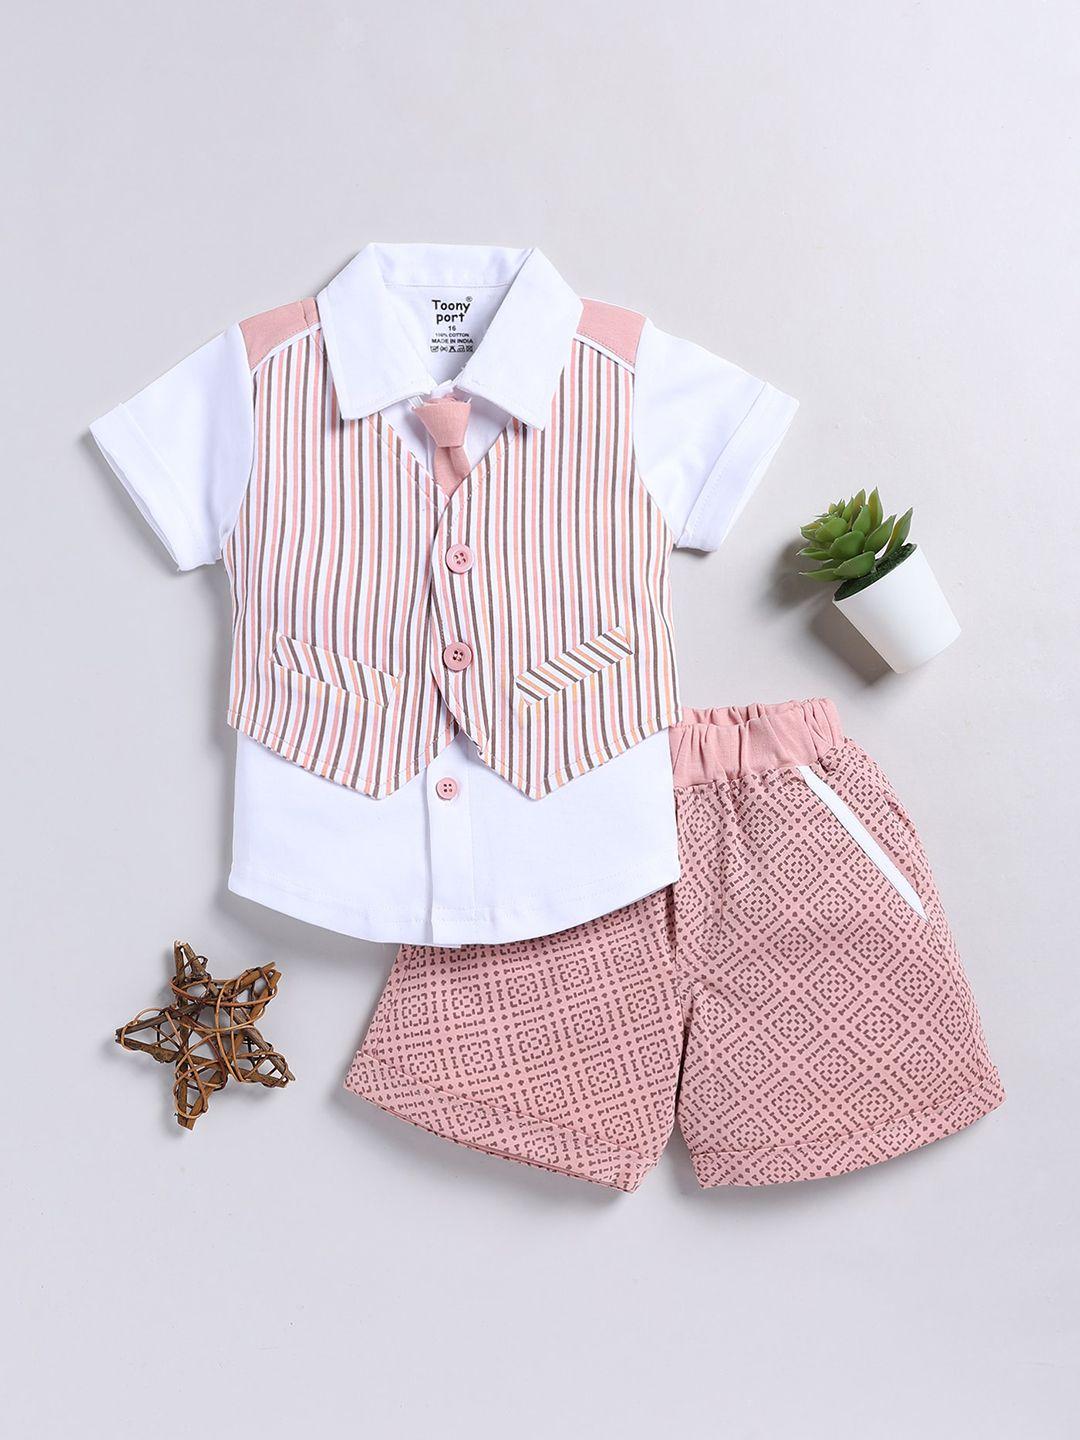 Toonyport Kids Striped Shirt Collar Pure Cotton Clothing Set